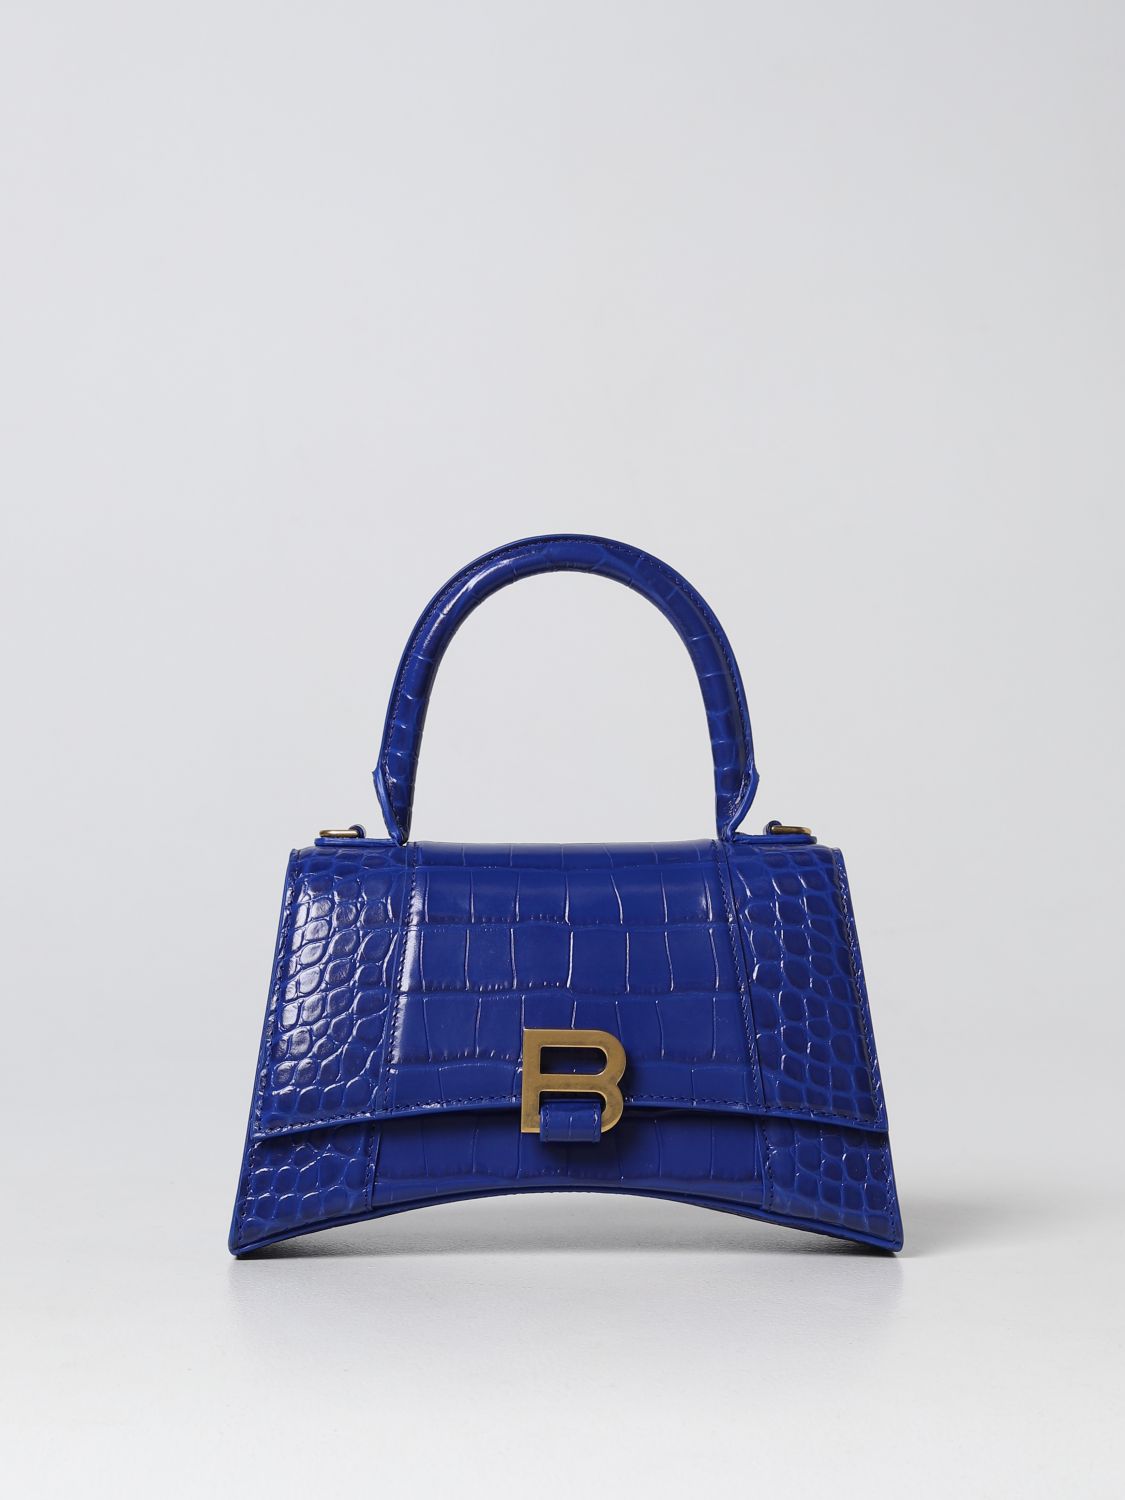 BALENCIAGA: Hourglass S bag in leather - Blue Balenciaga handbag 5935461LRGM online on GIGLIO.COM